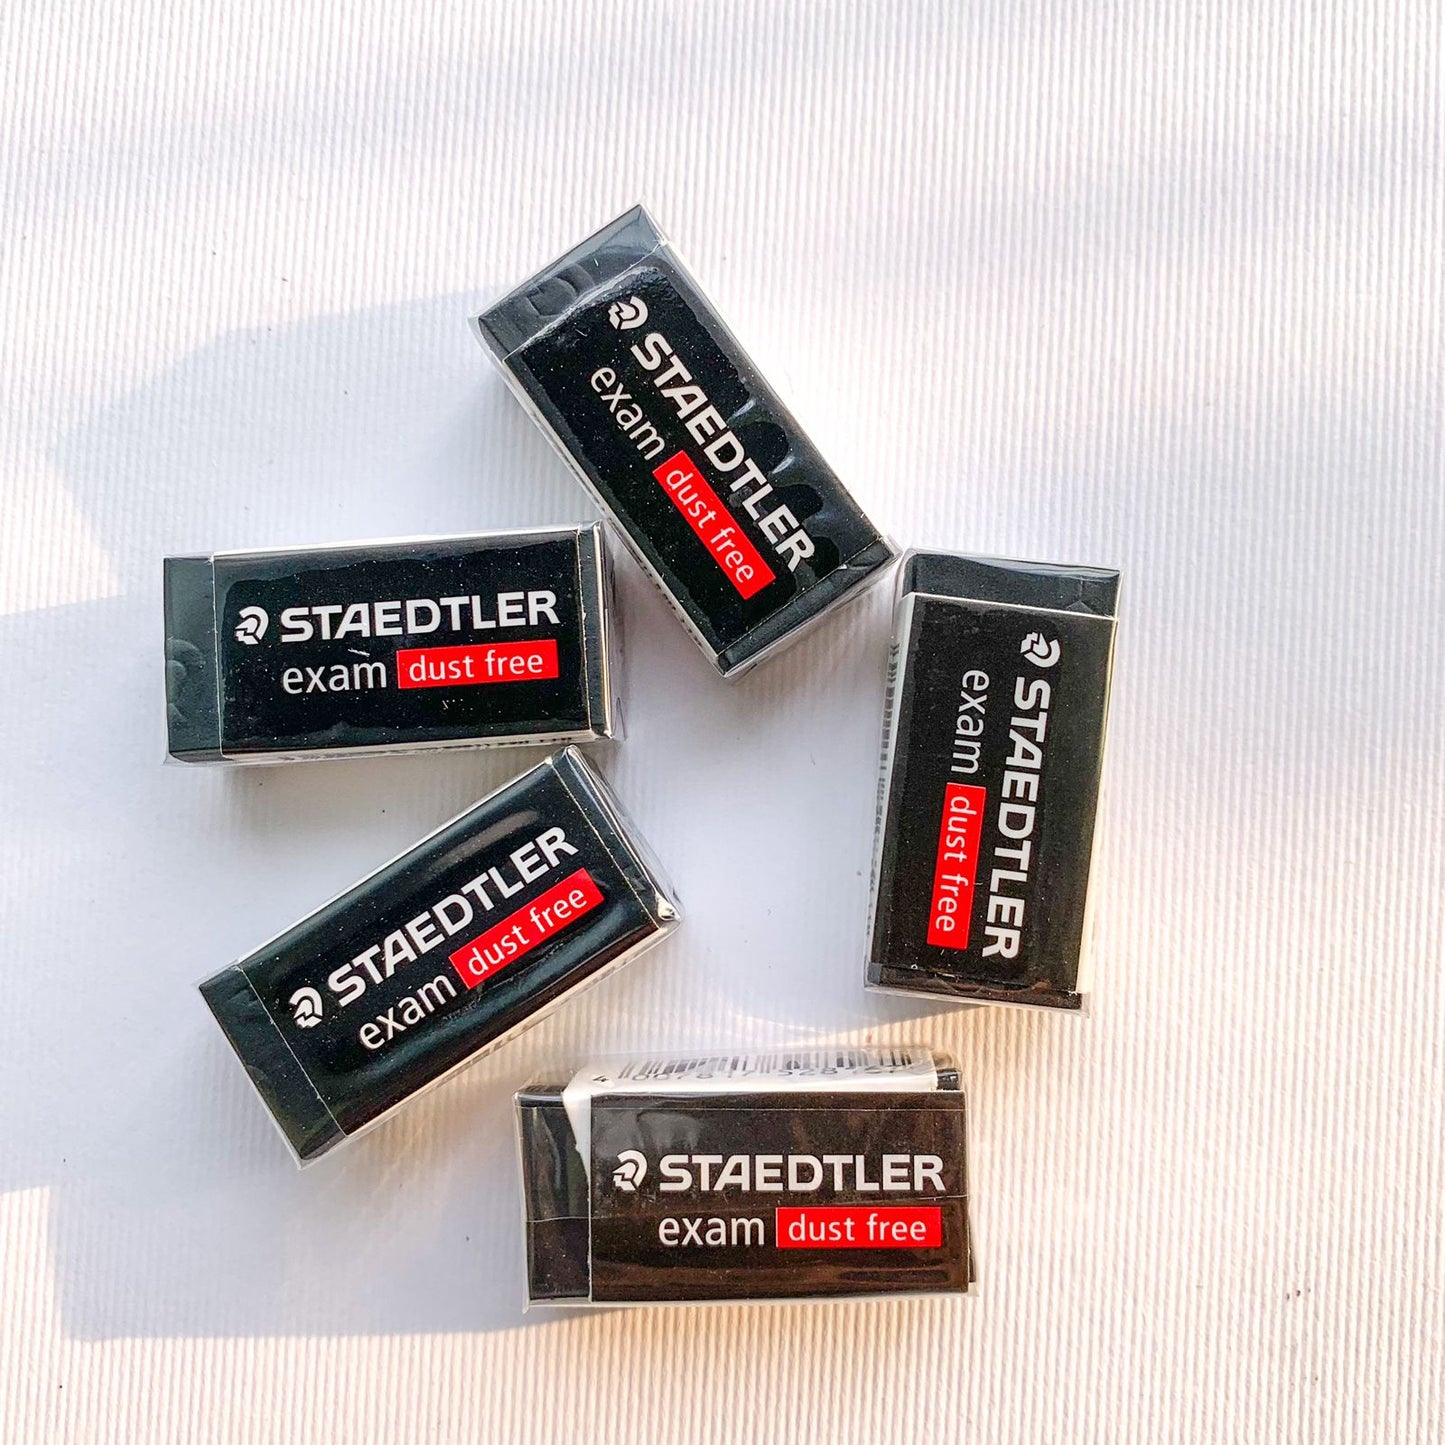 STAEDTLER - 1Pcs Exam Eraser Dust Free Black Small